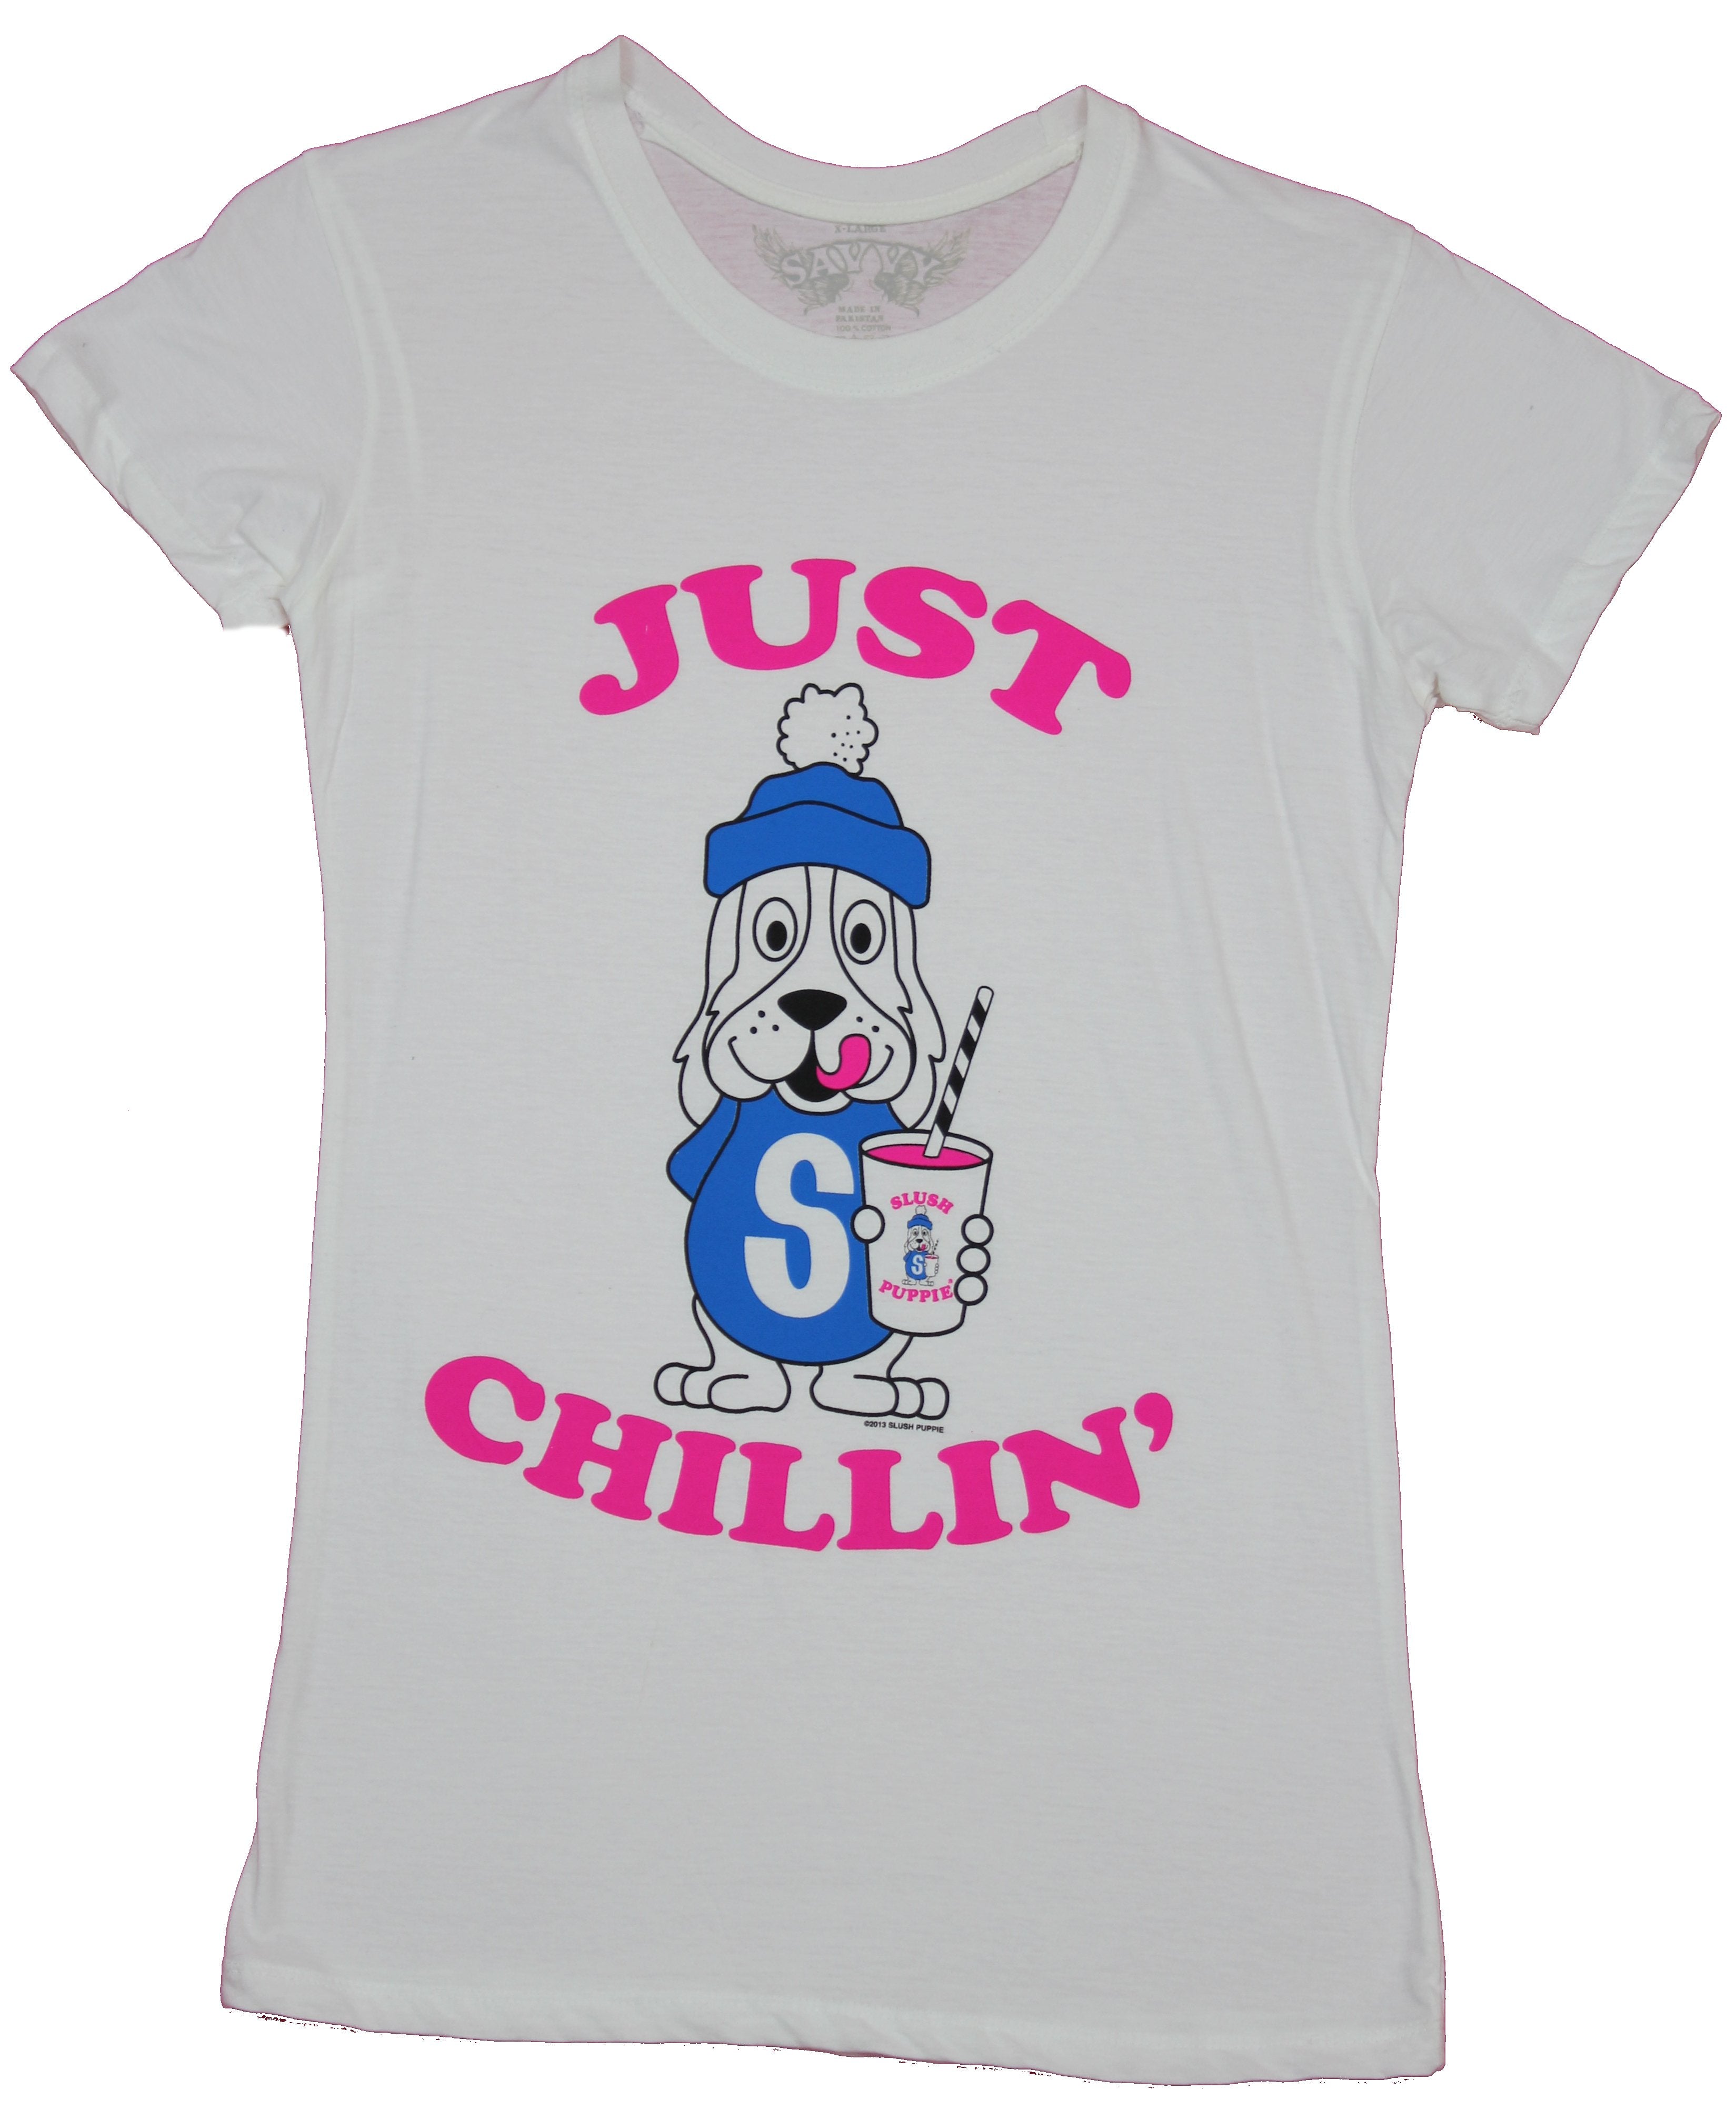 Slush Puppy Girls Juniors T-Shirt  - Just Chillin Slush Puppy Image